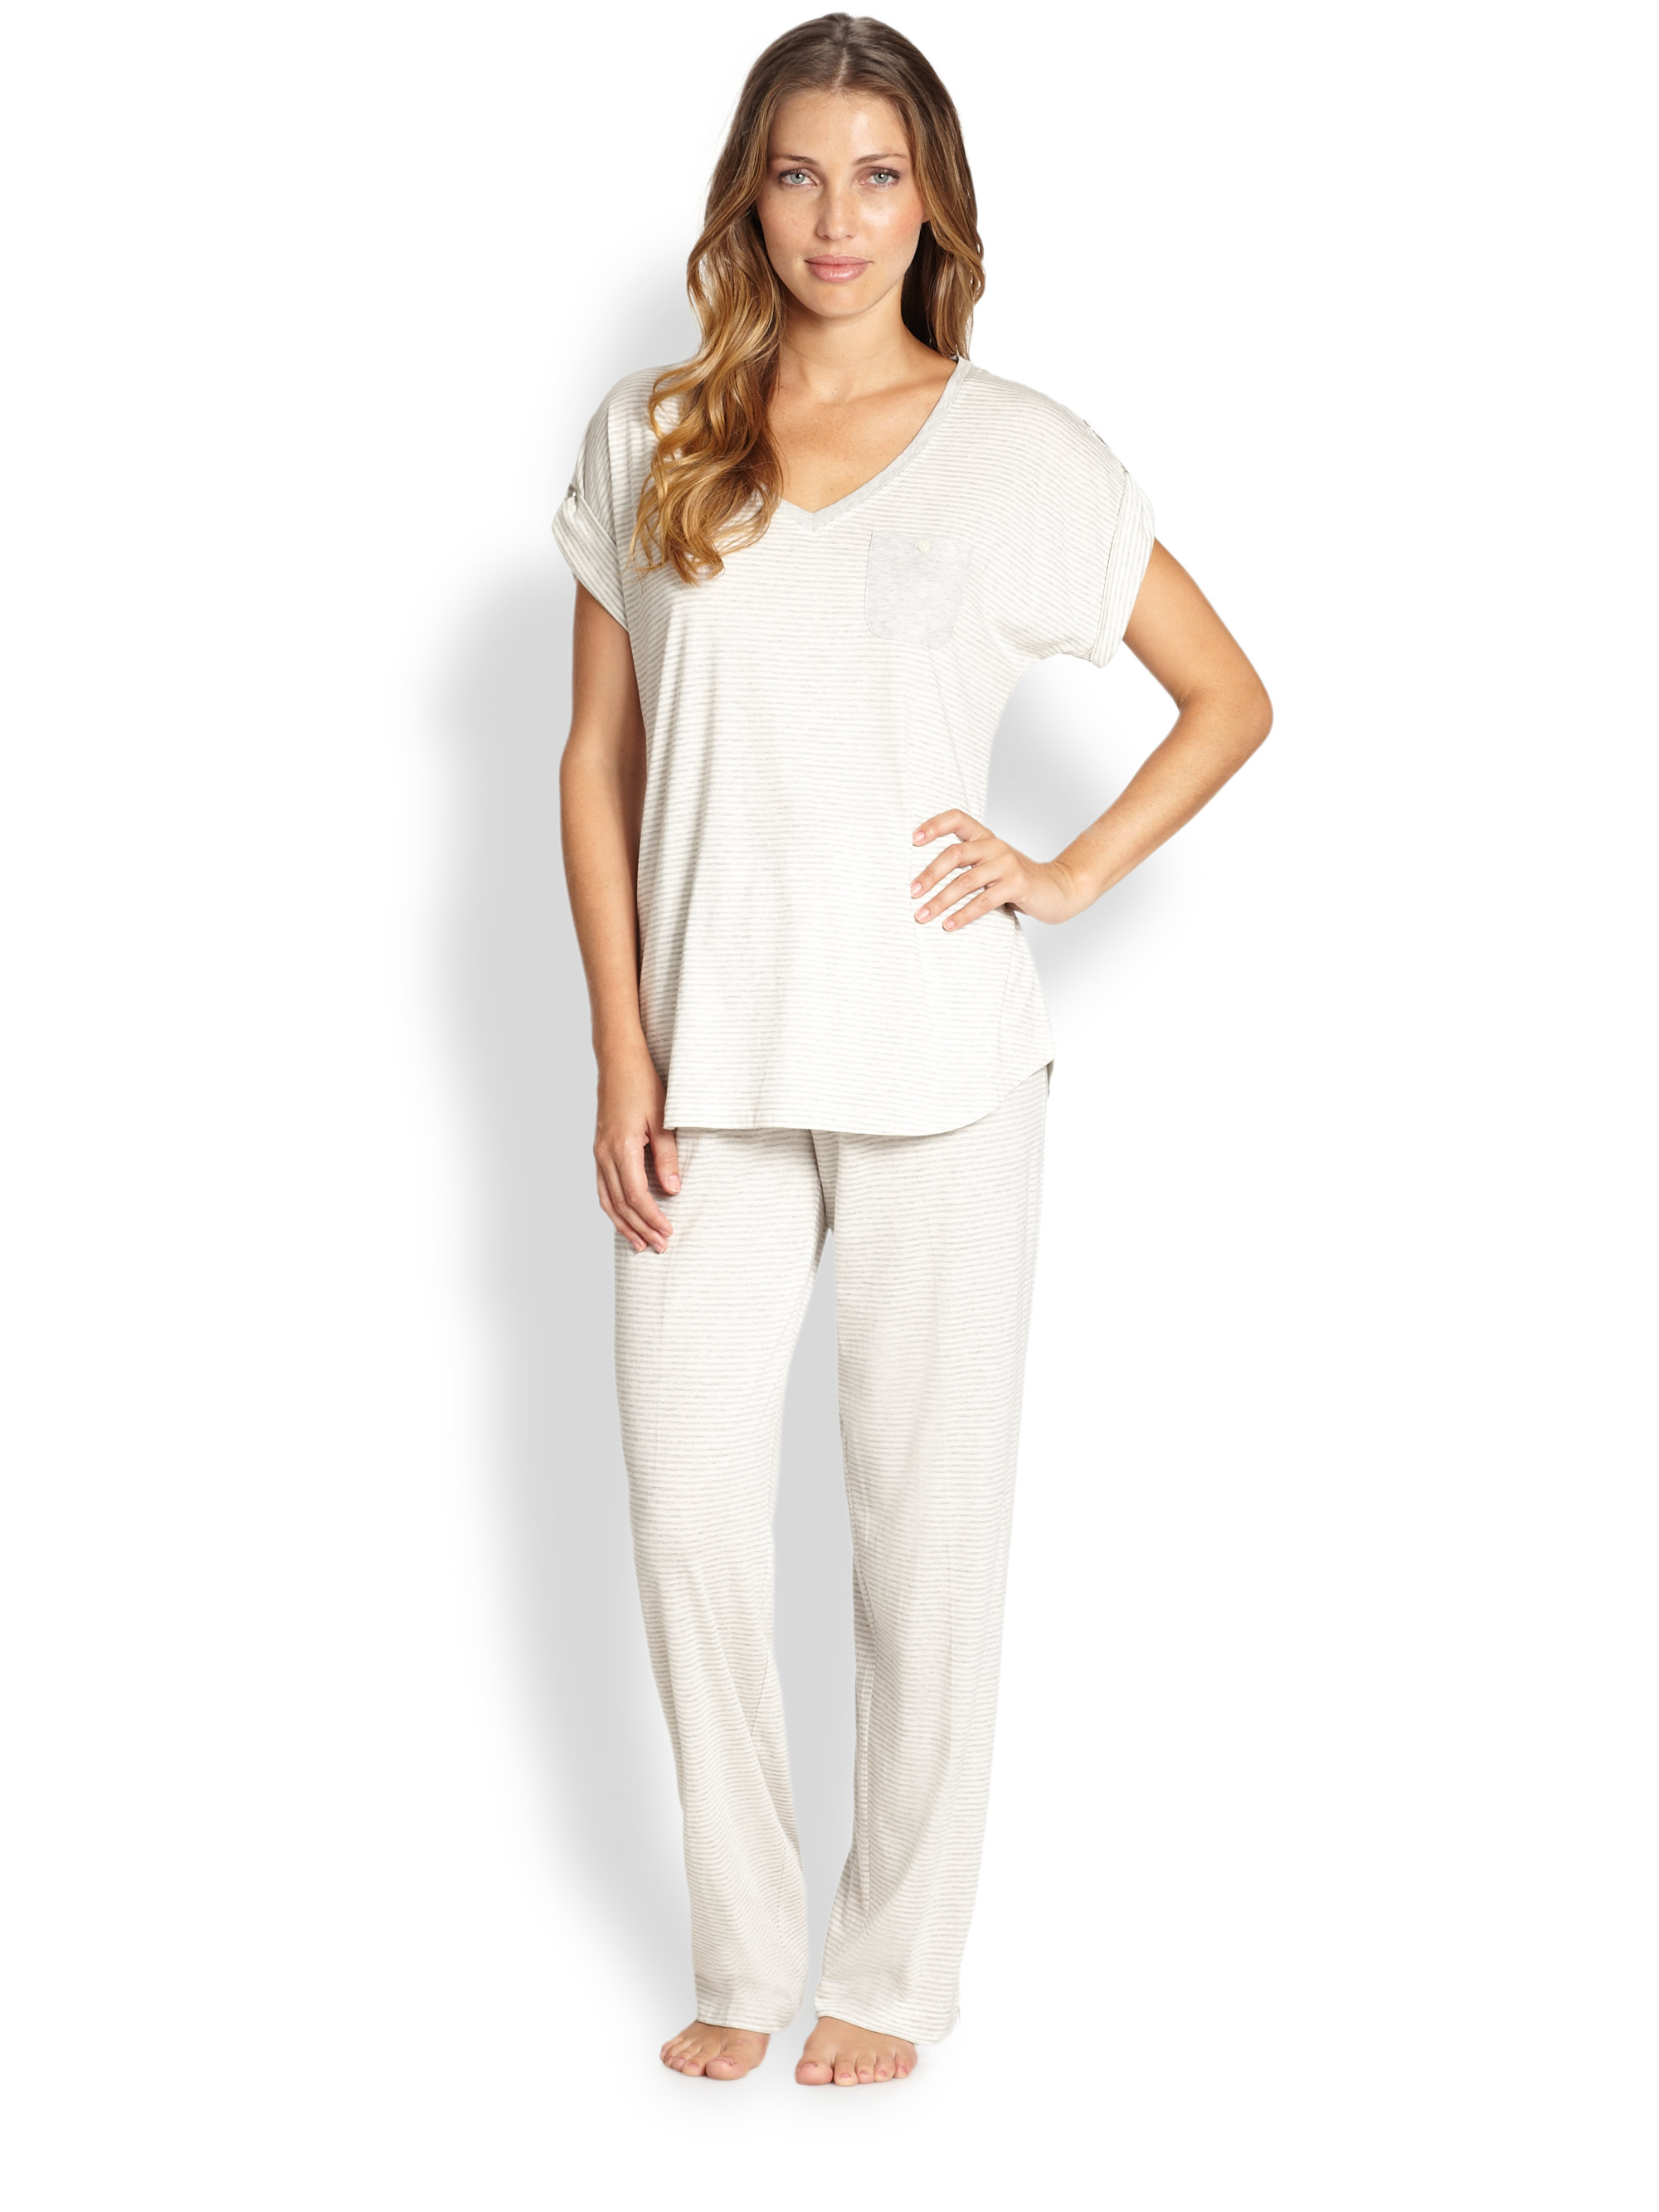 Lyst - Cottonista Stripe Pajama Set in Gray